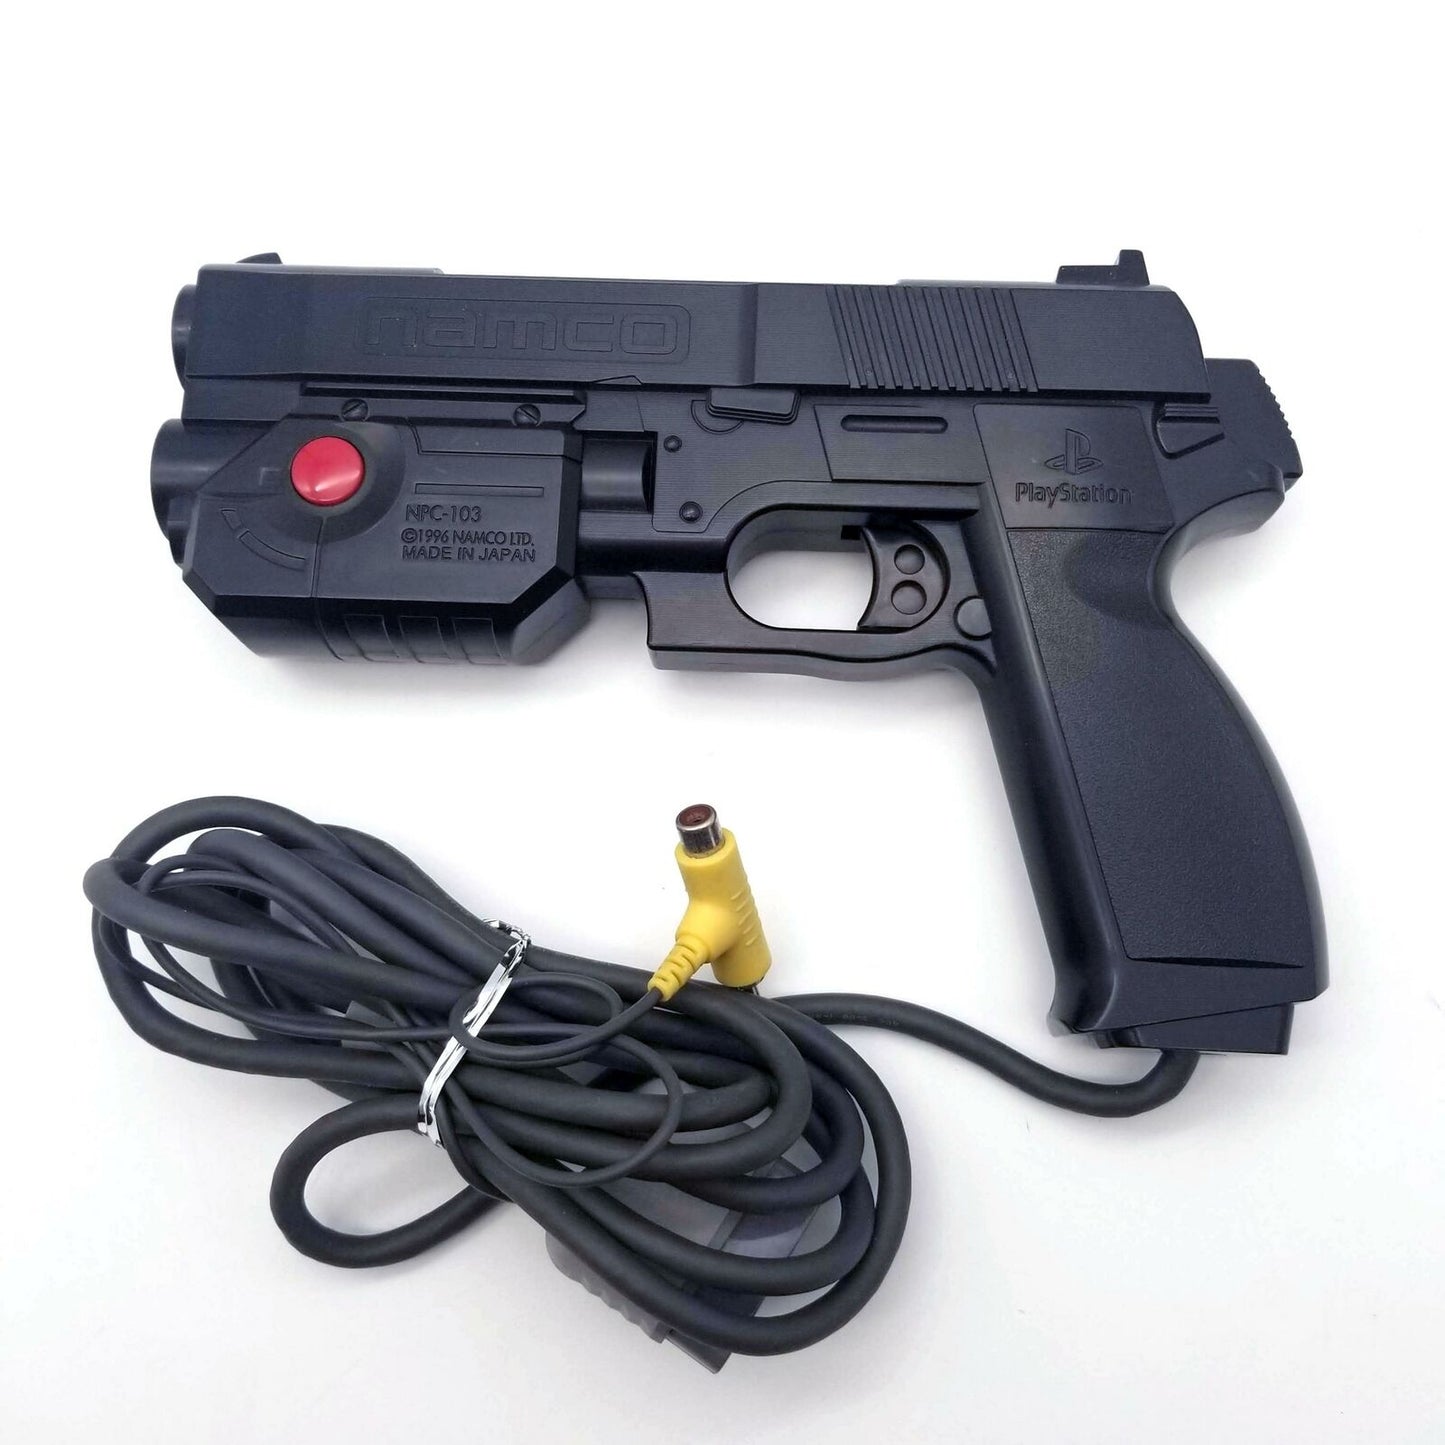 Guncon Controller PS1 NPC-103 Black Japan Official OEM Playstation 1 Light Gun